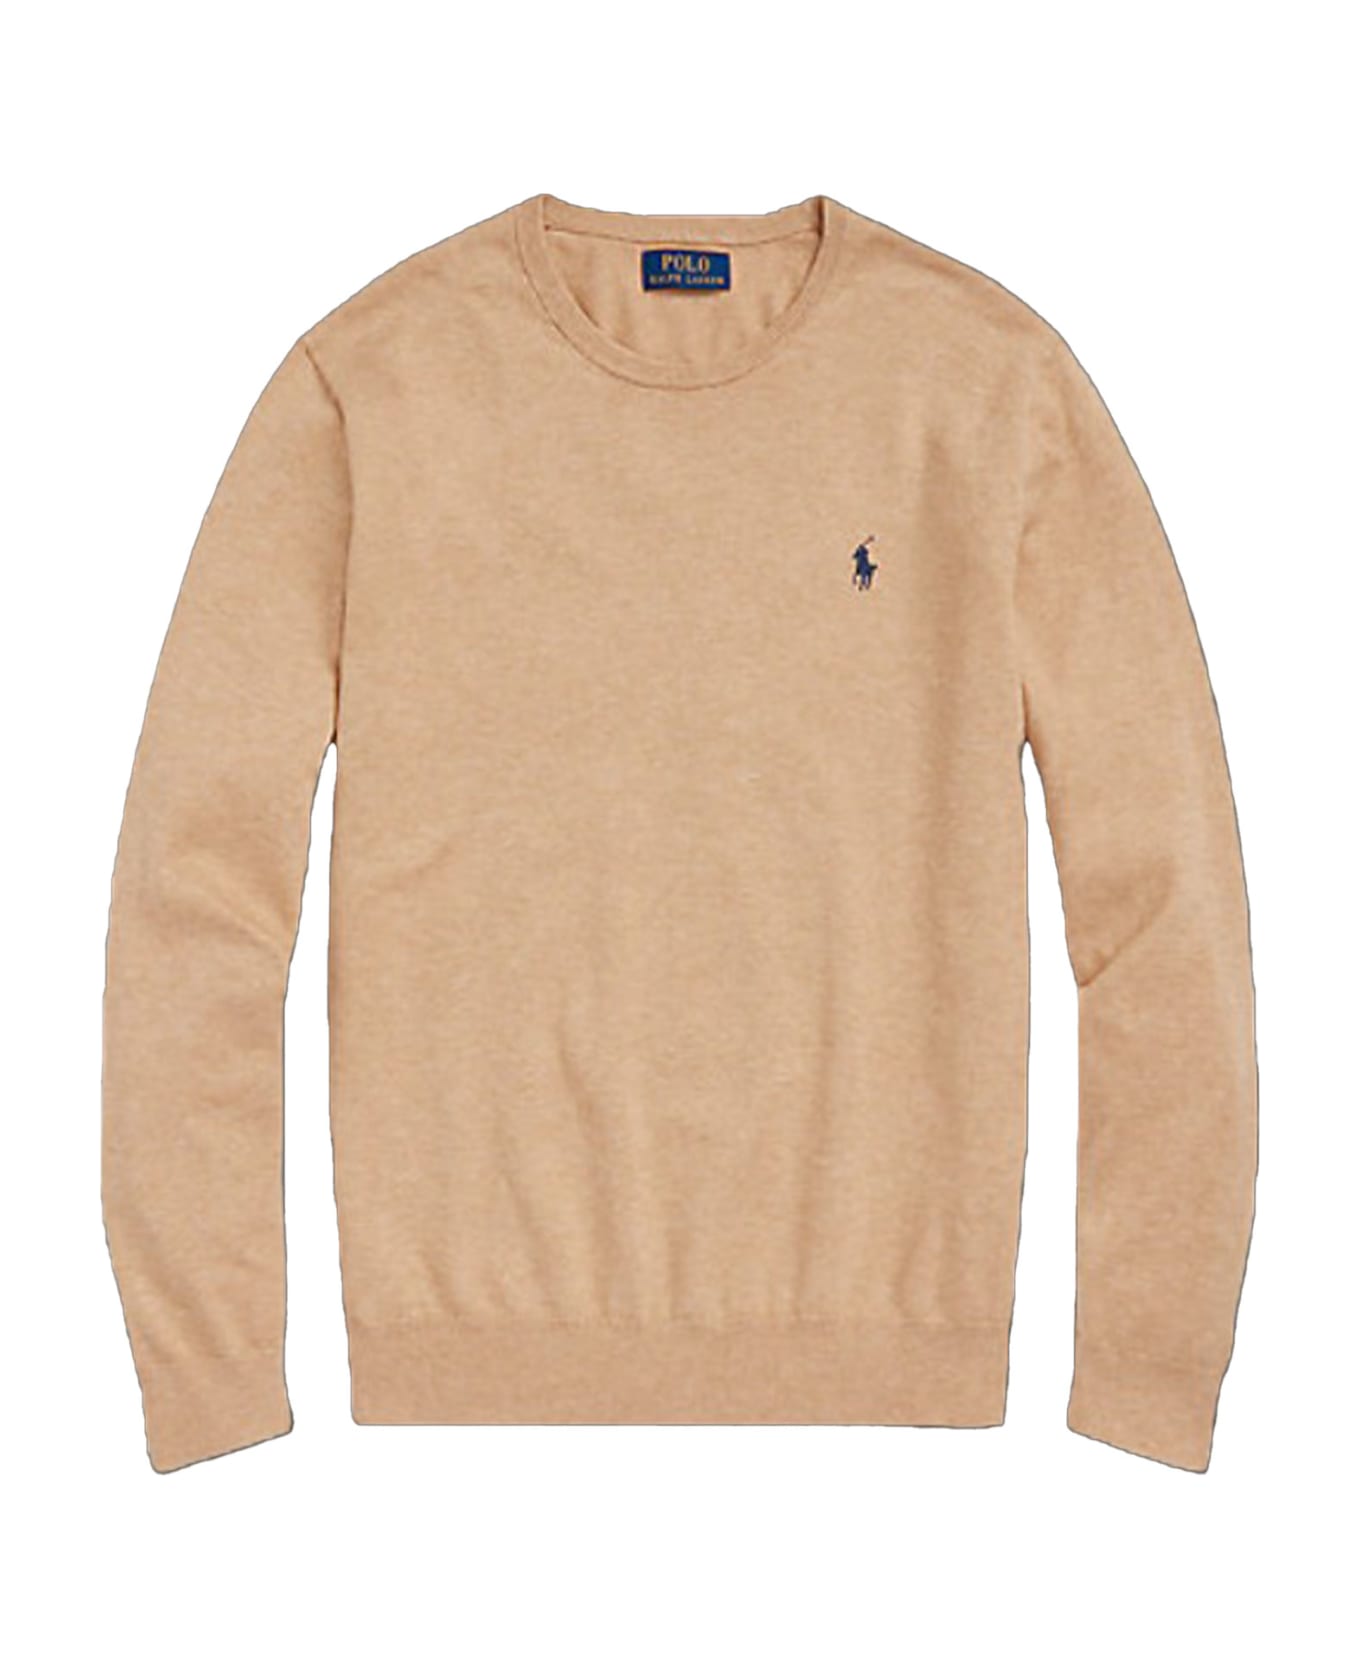 Polo Ralph Lauren Sweater - CAMEL MELANGE